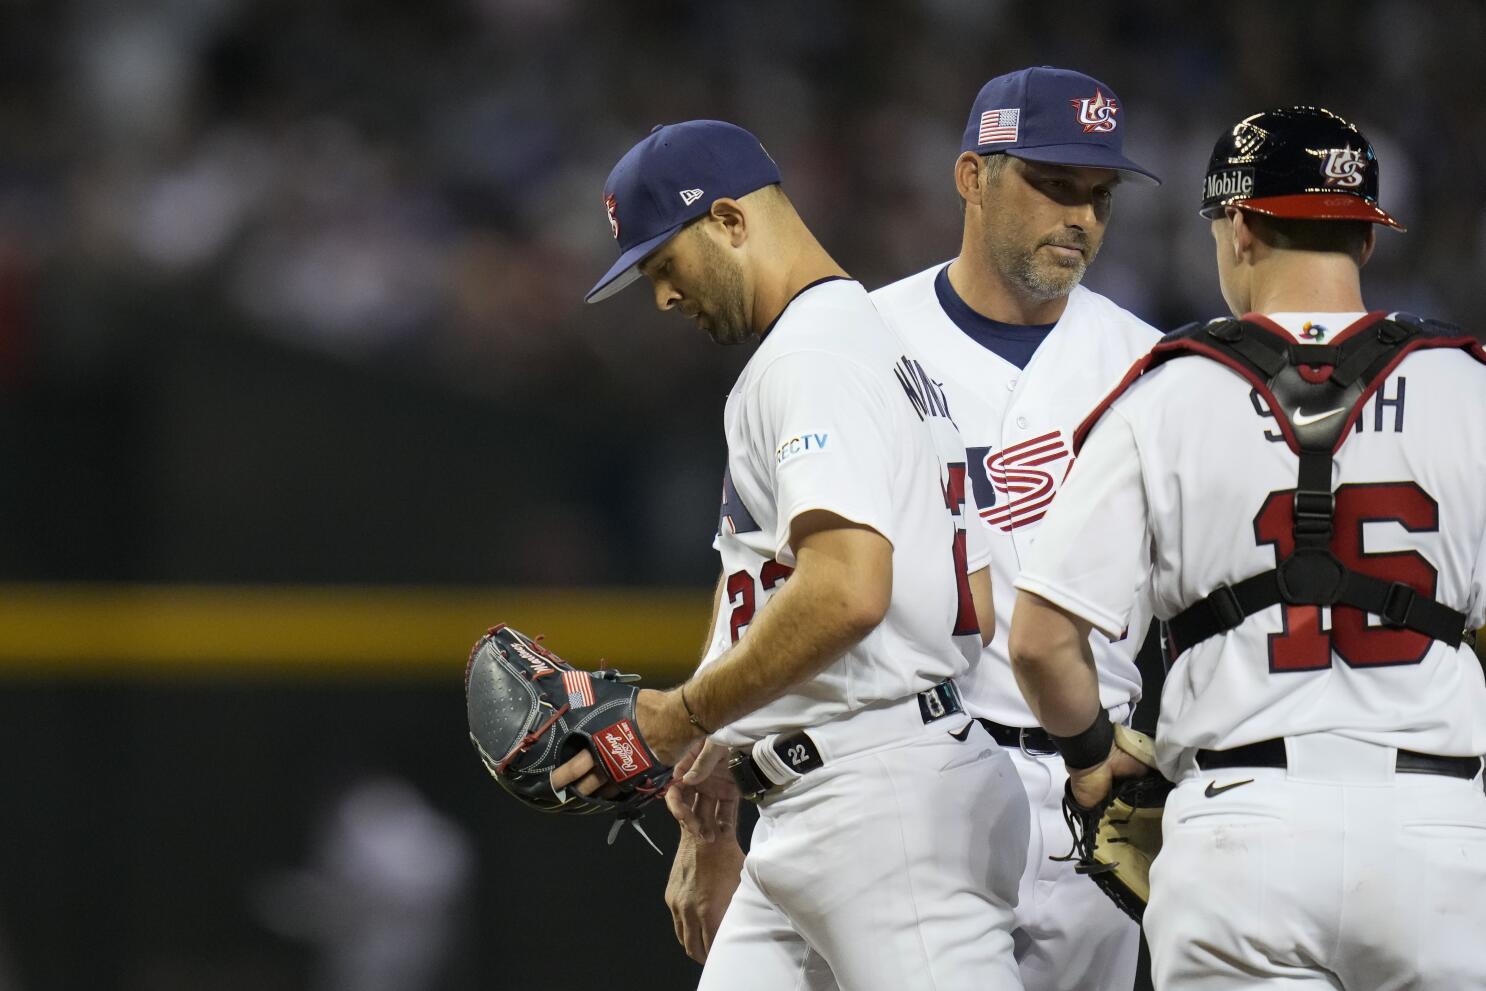 Nick Martinez - MLB Relief pitcher - News, Stats, Bio and more